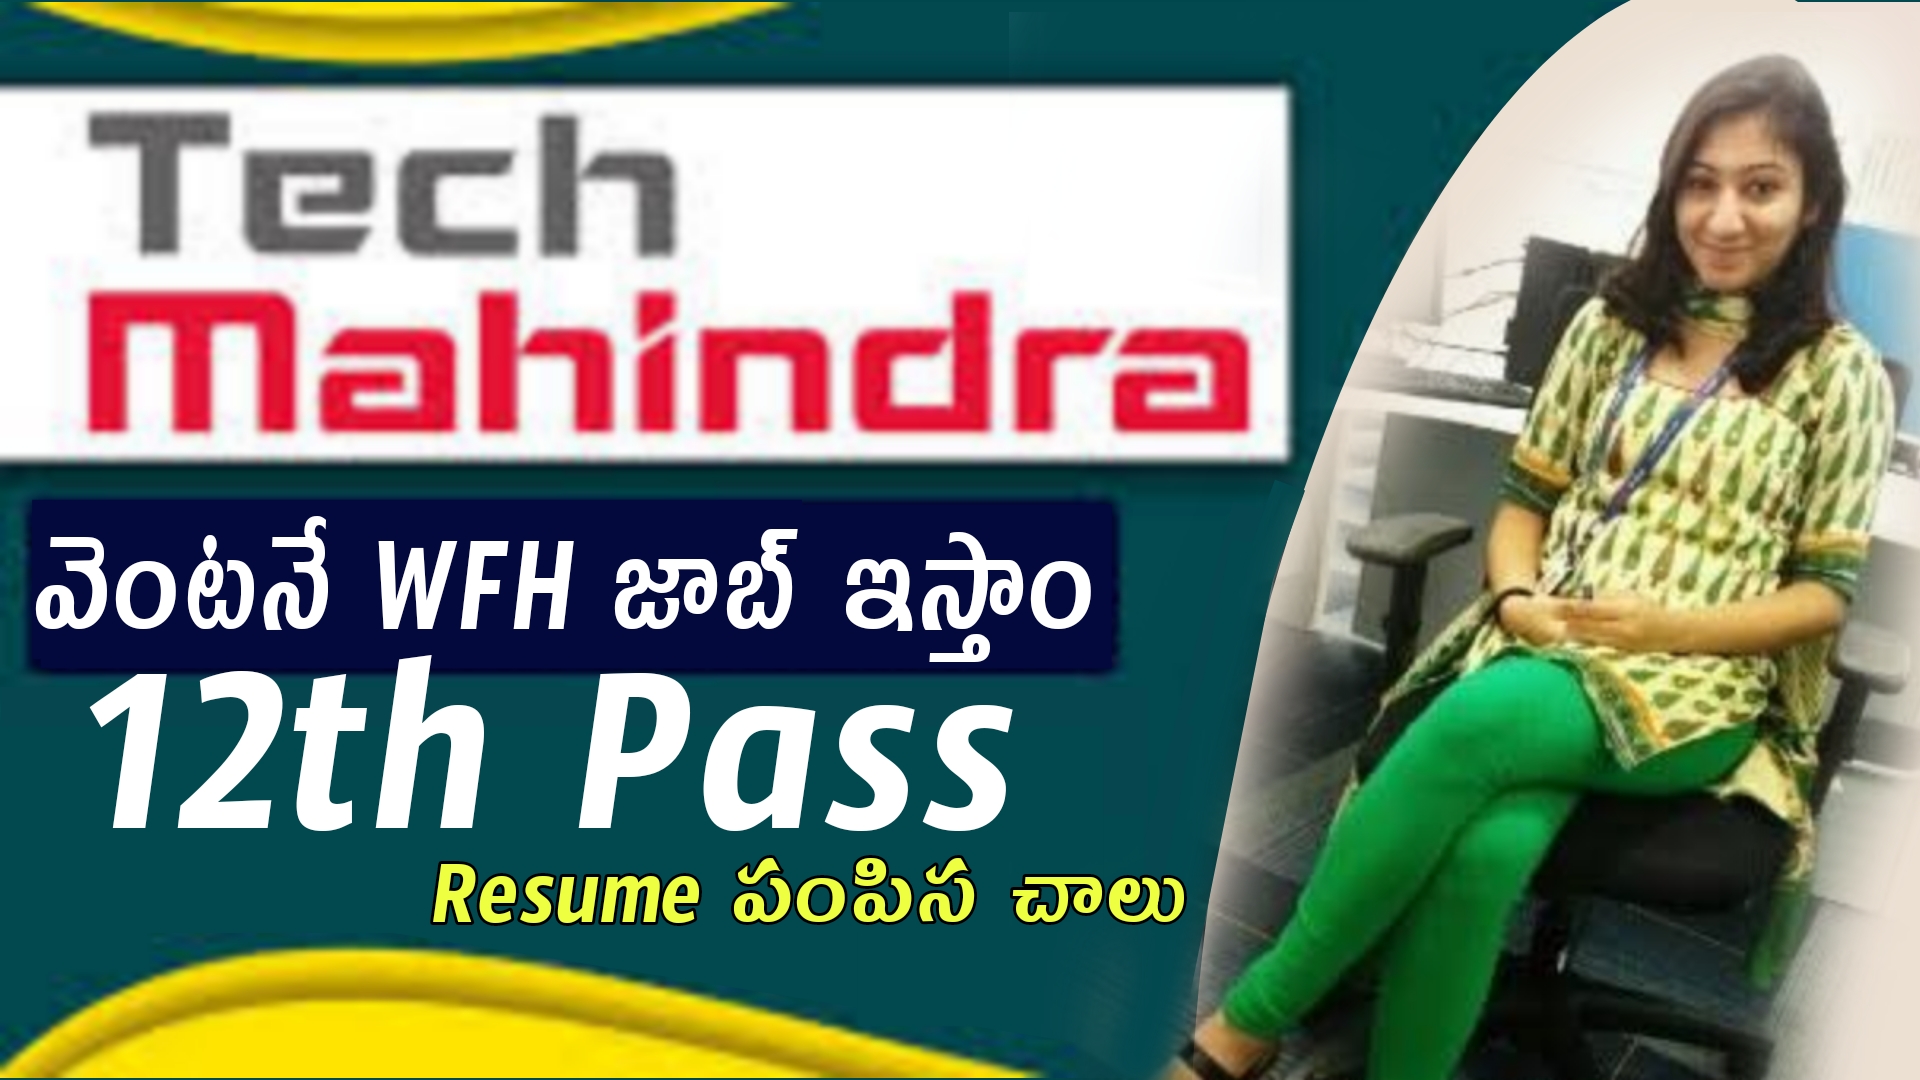 Tech Mahindra Recruitment 2023 : పరీక్ష లేకుండా డైరెక్ట్ జాబ్ ఇస్తారు | 20,000 జీతం ఇస్తారు | WFH Customer Support Associate Jobs In Telugu | Free Job Search | Latest Jobs In Telugu 